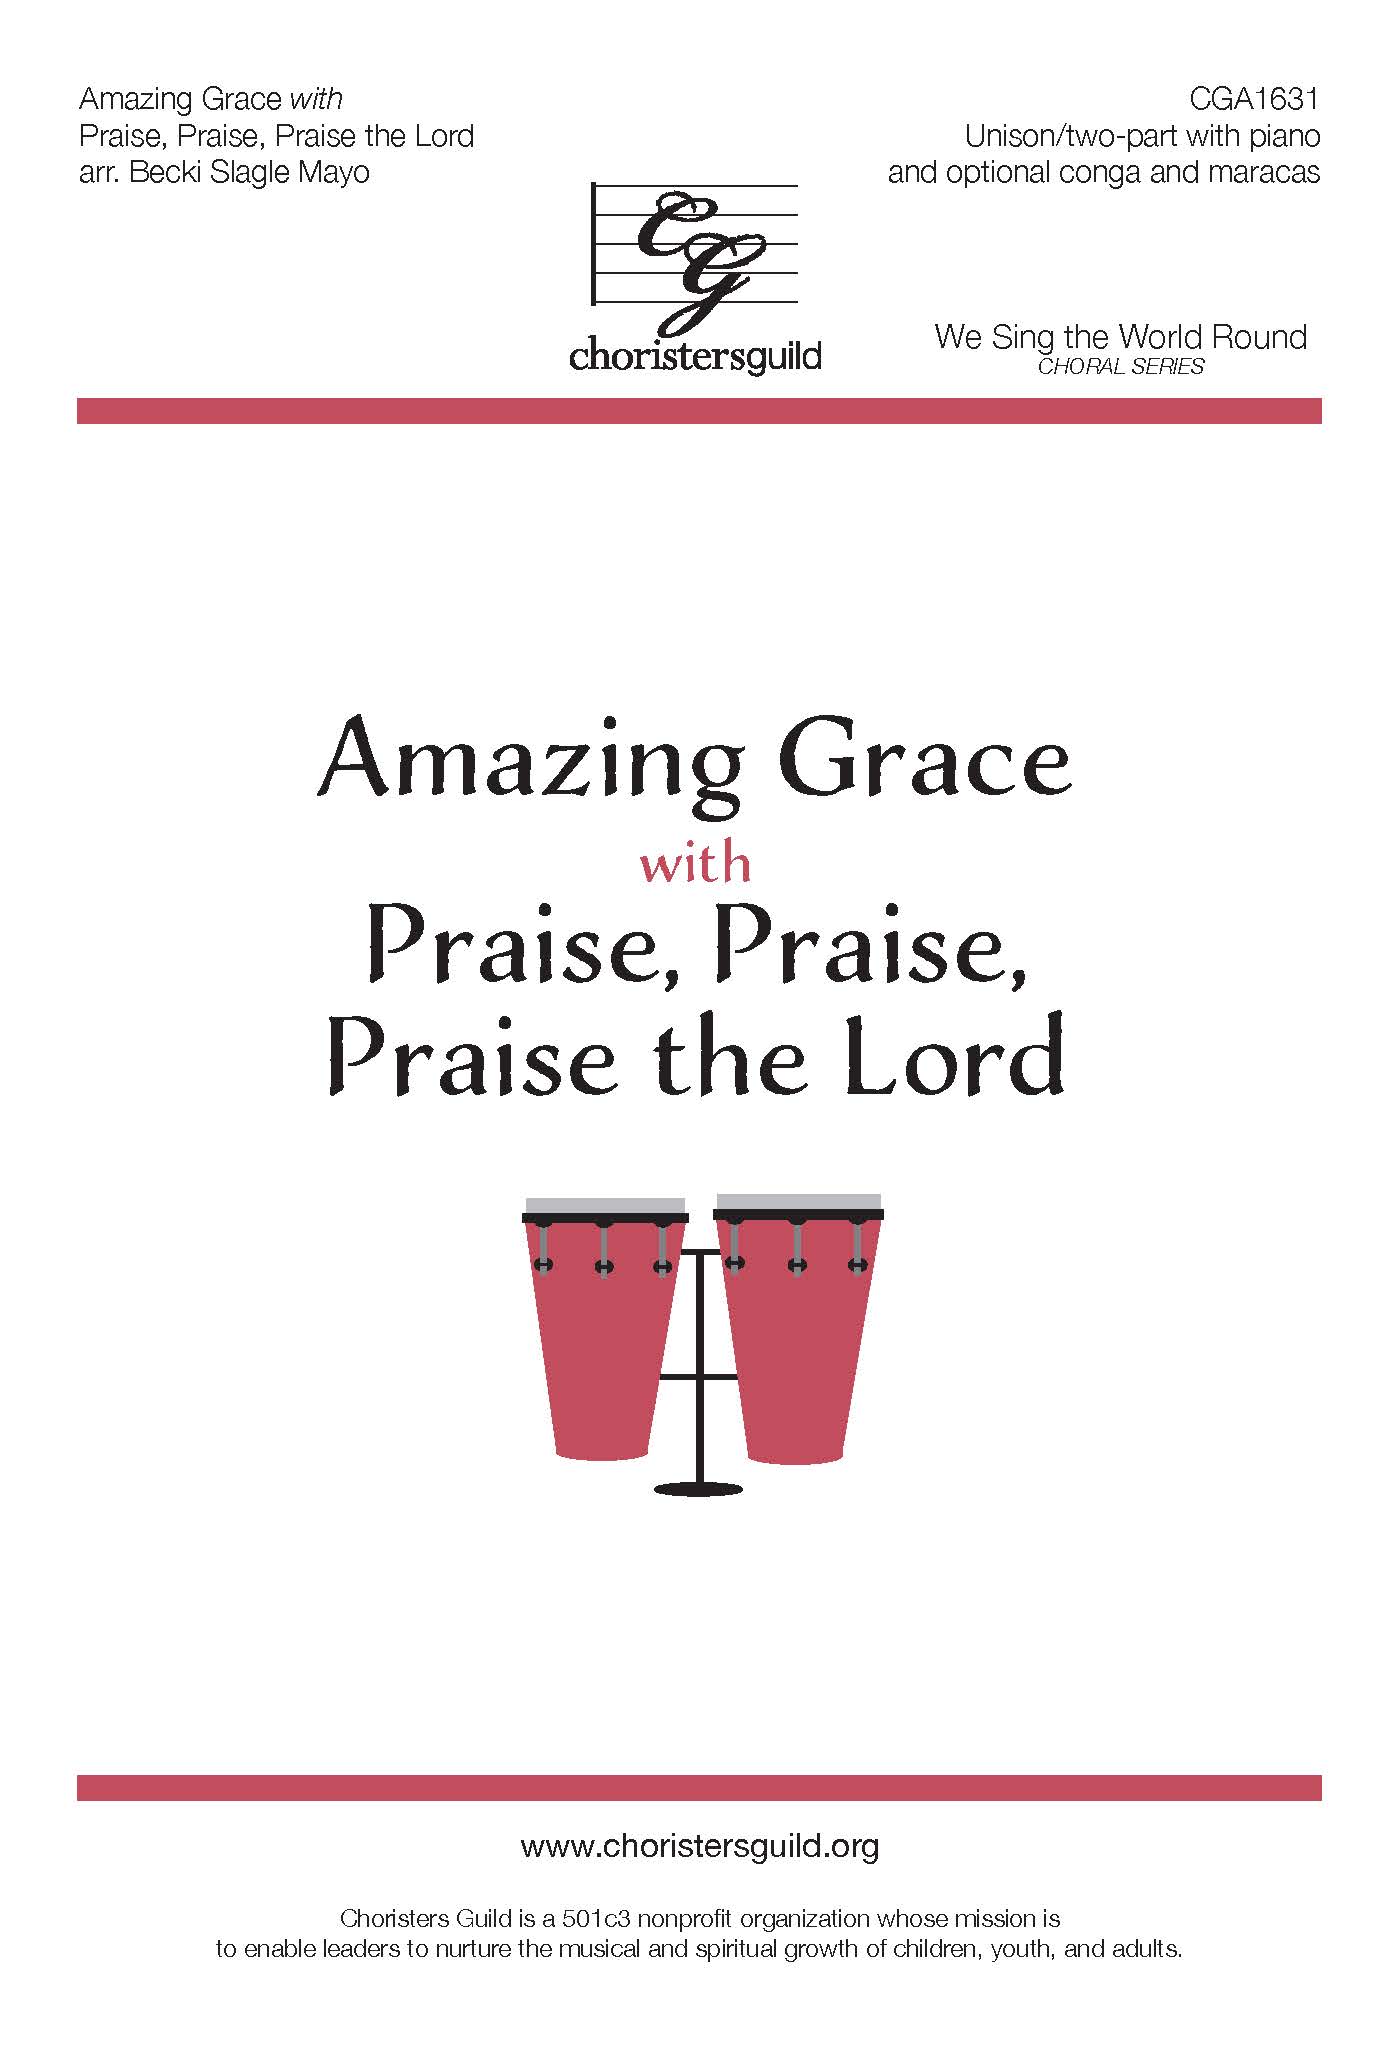 Amazing Grace with Praise